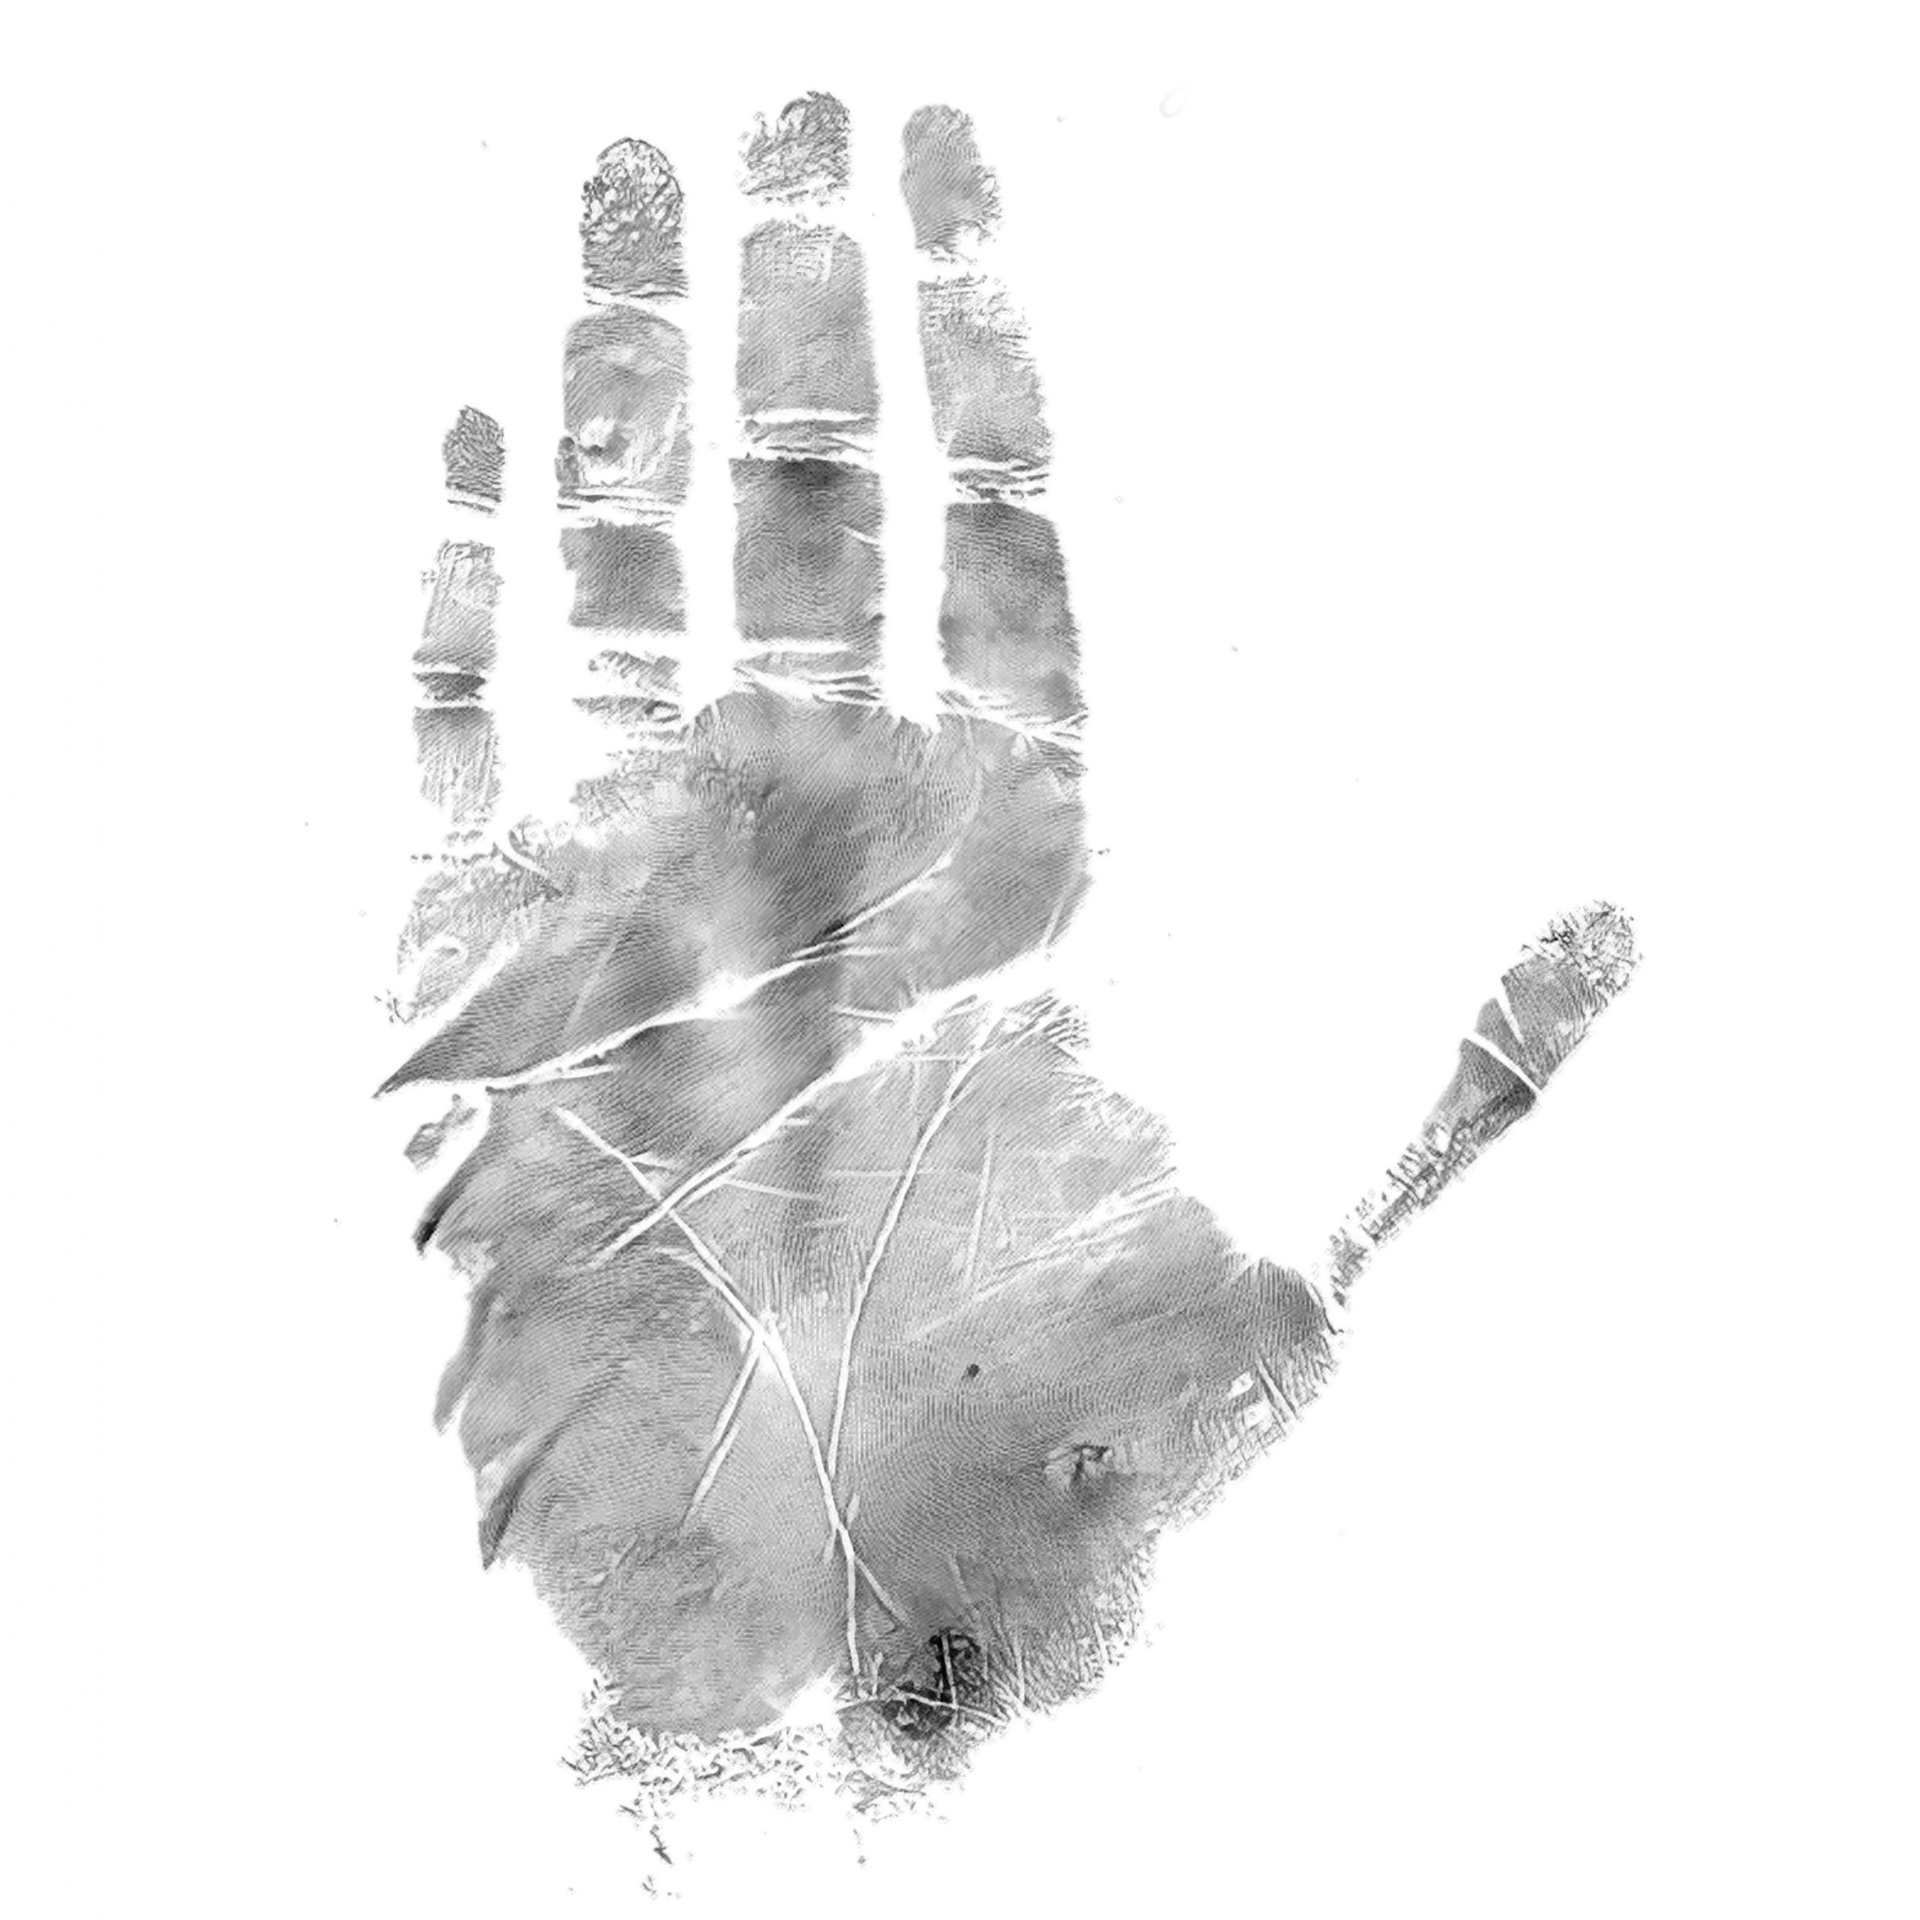 Handprint of the suspect from the 1946 Texarkana Phantom Killer case file released by the FBI.